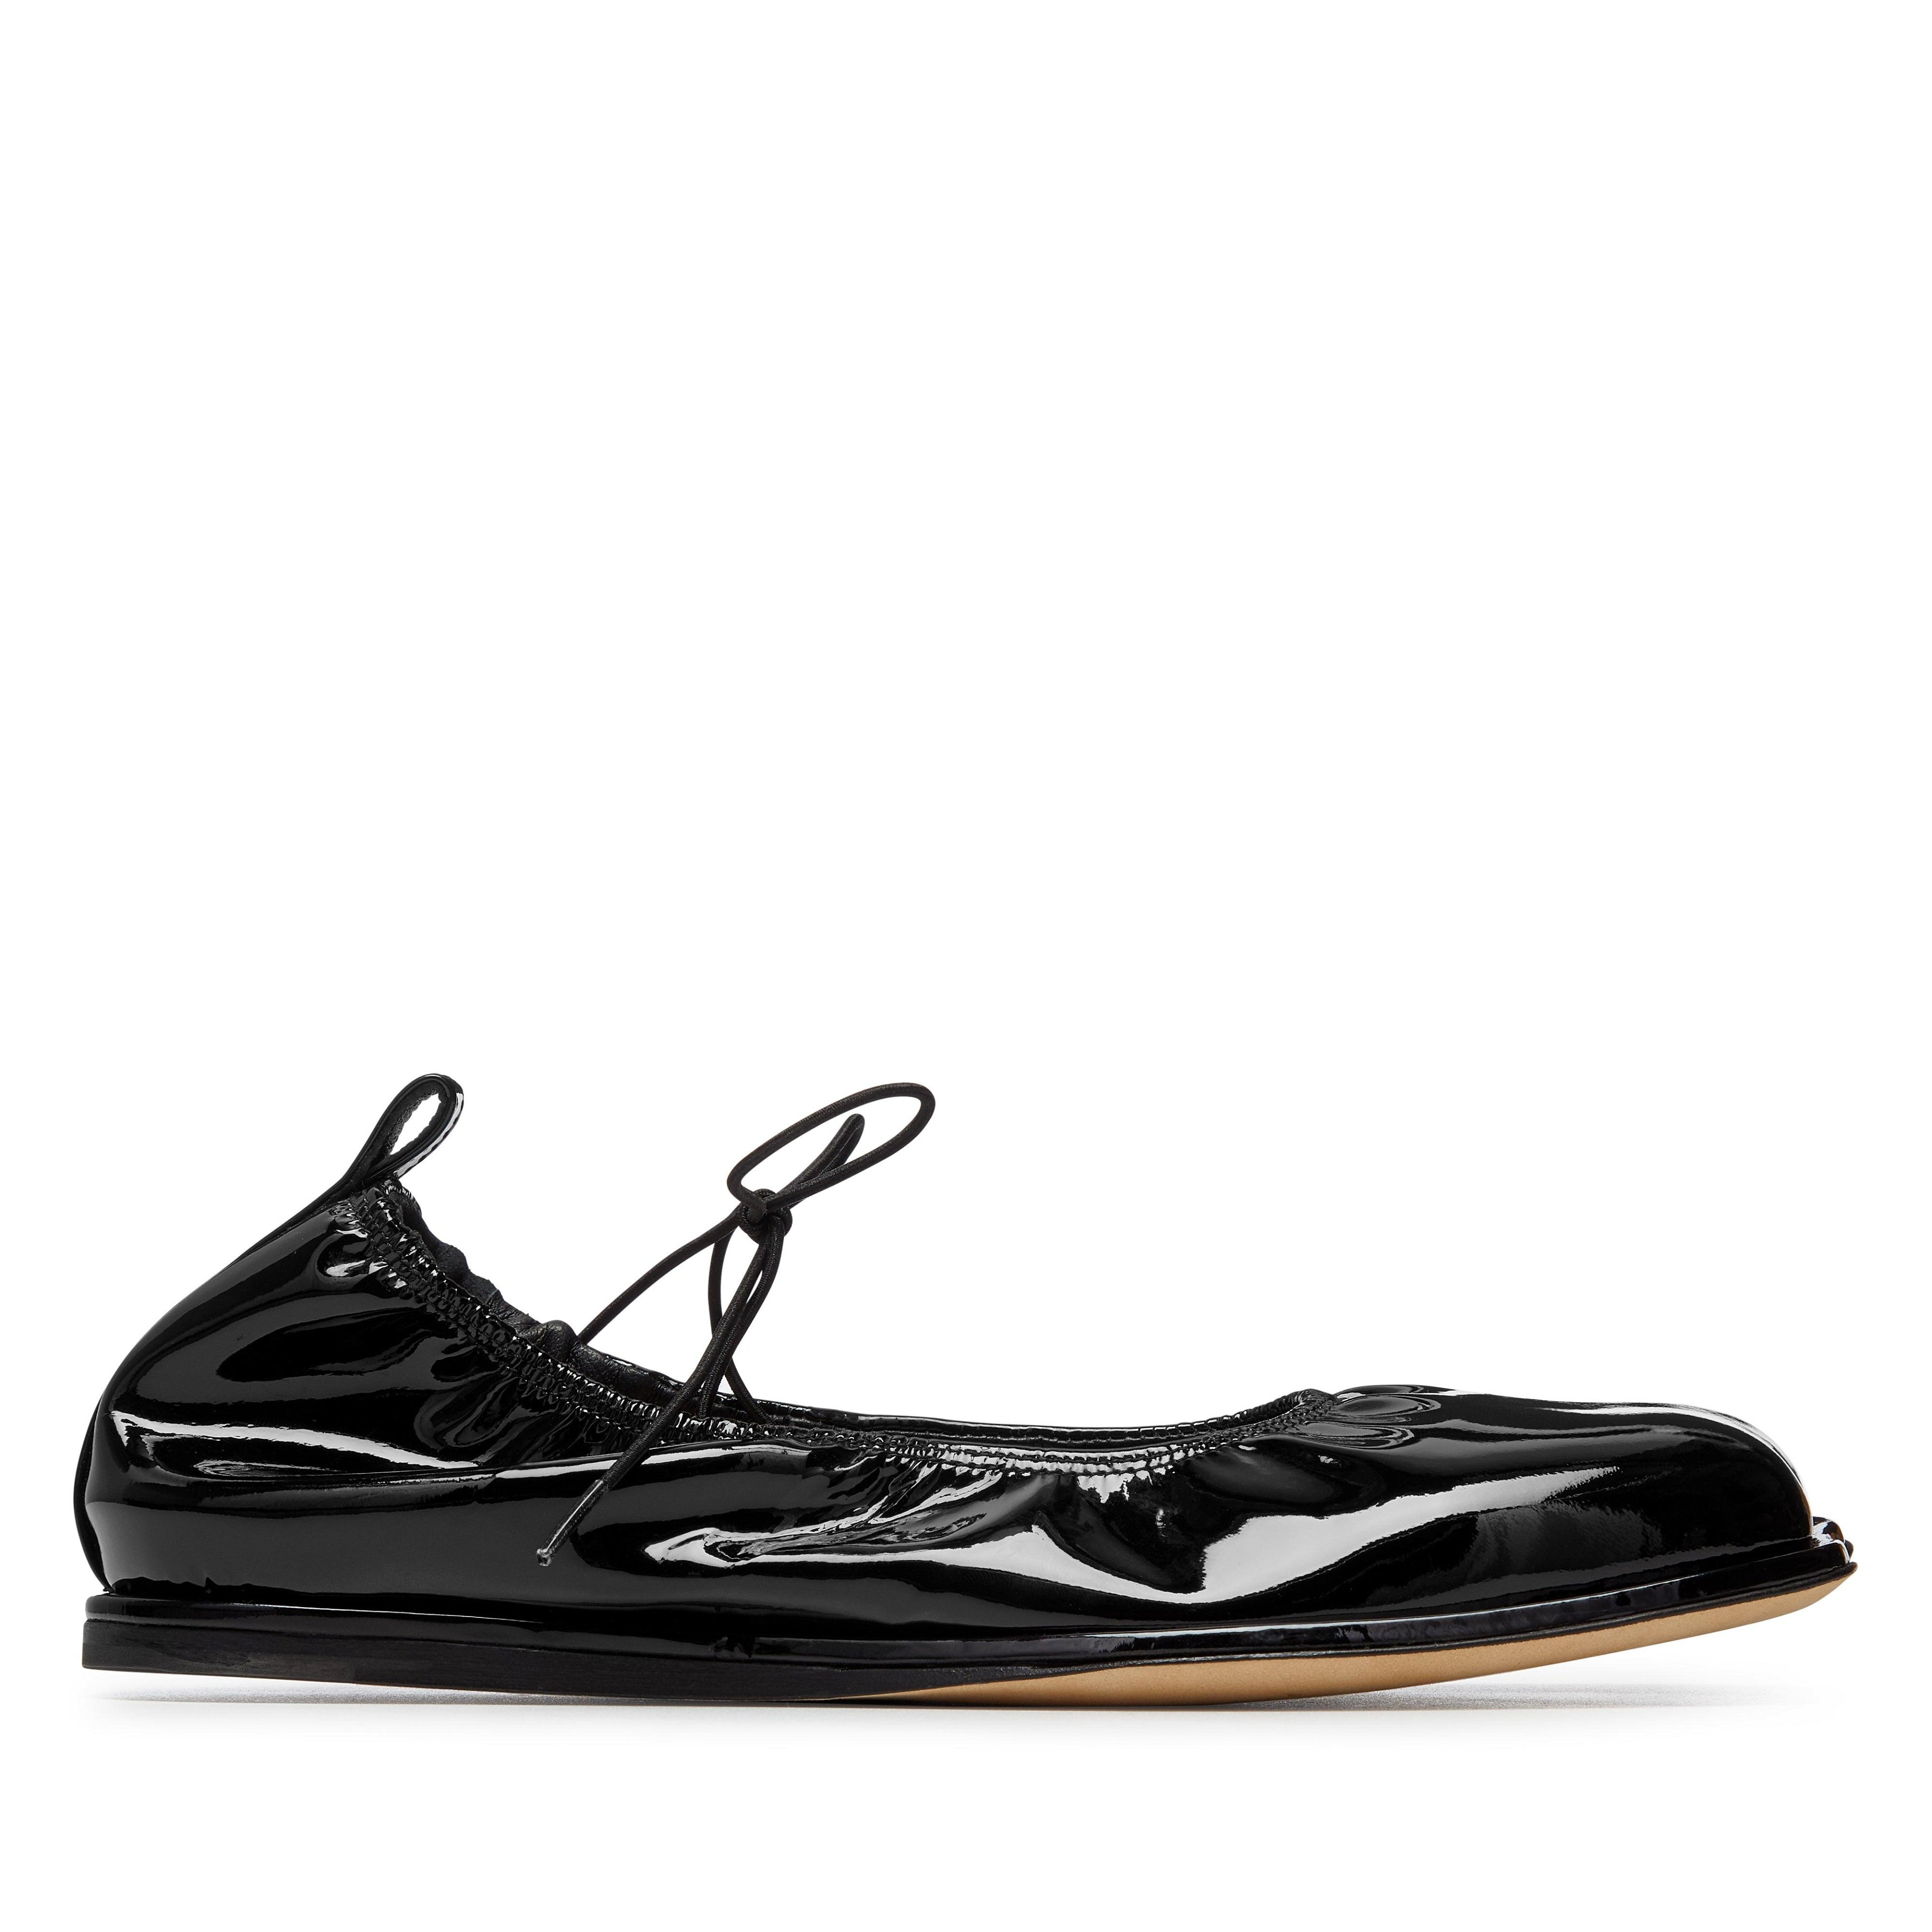 Simone Rocha - Women's Heart-toe Patent Leather Ballerina Shoes - (Black) by SIMONE ROCHA